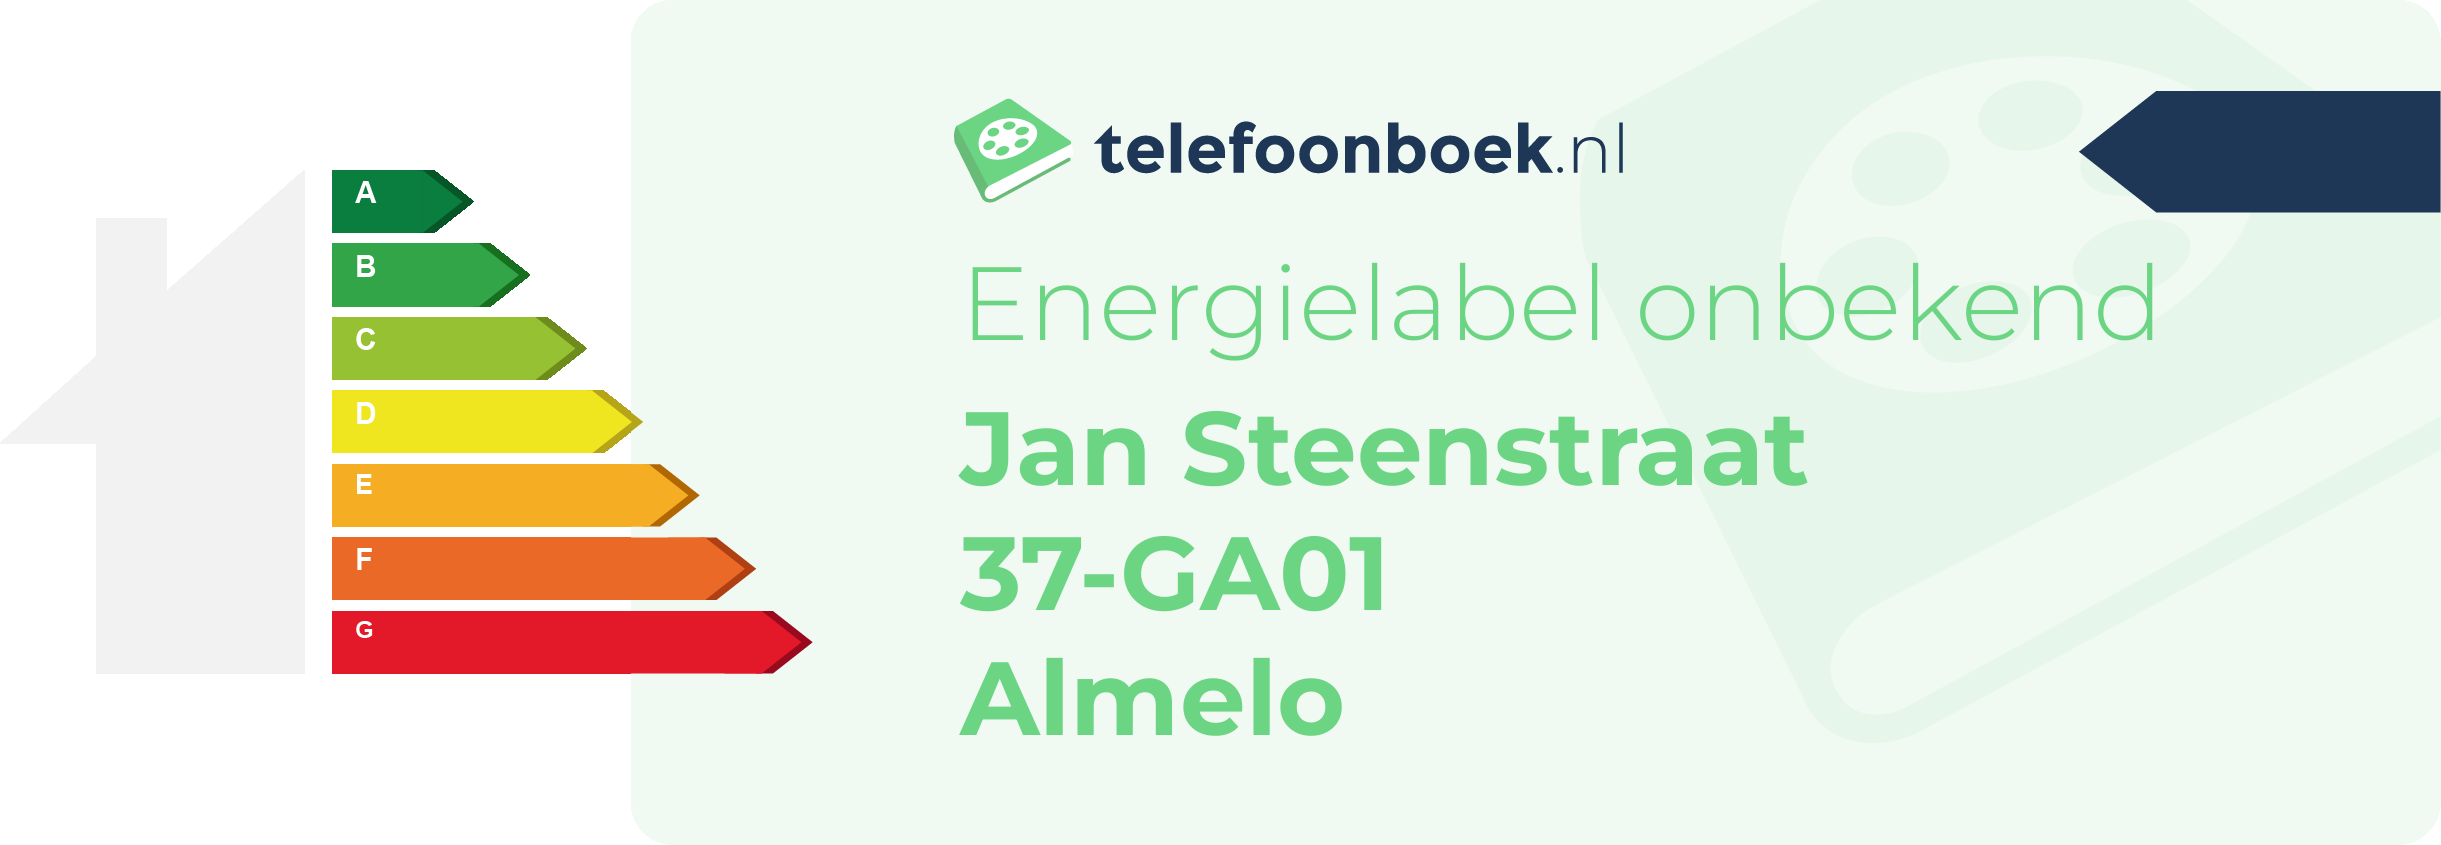 Energielabel Jan Steenstraat 37-GA01 Almelo